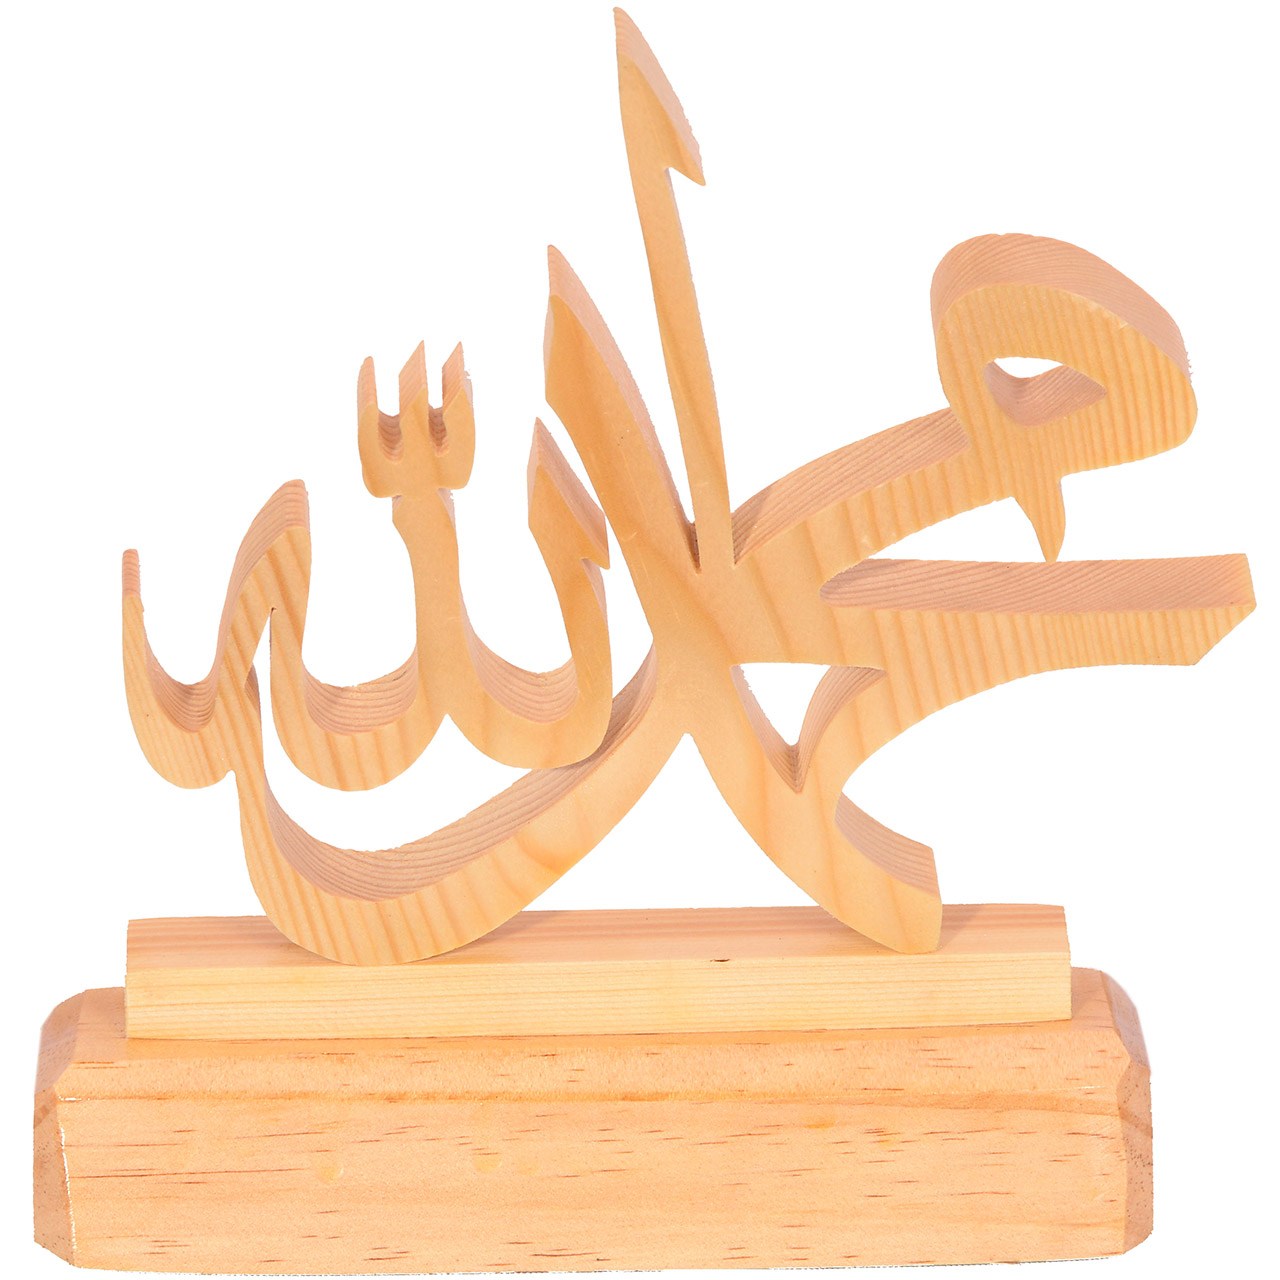 تندیس چوبی خوشنویسی یا محمد الله